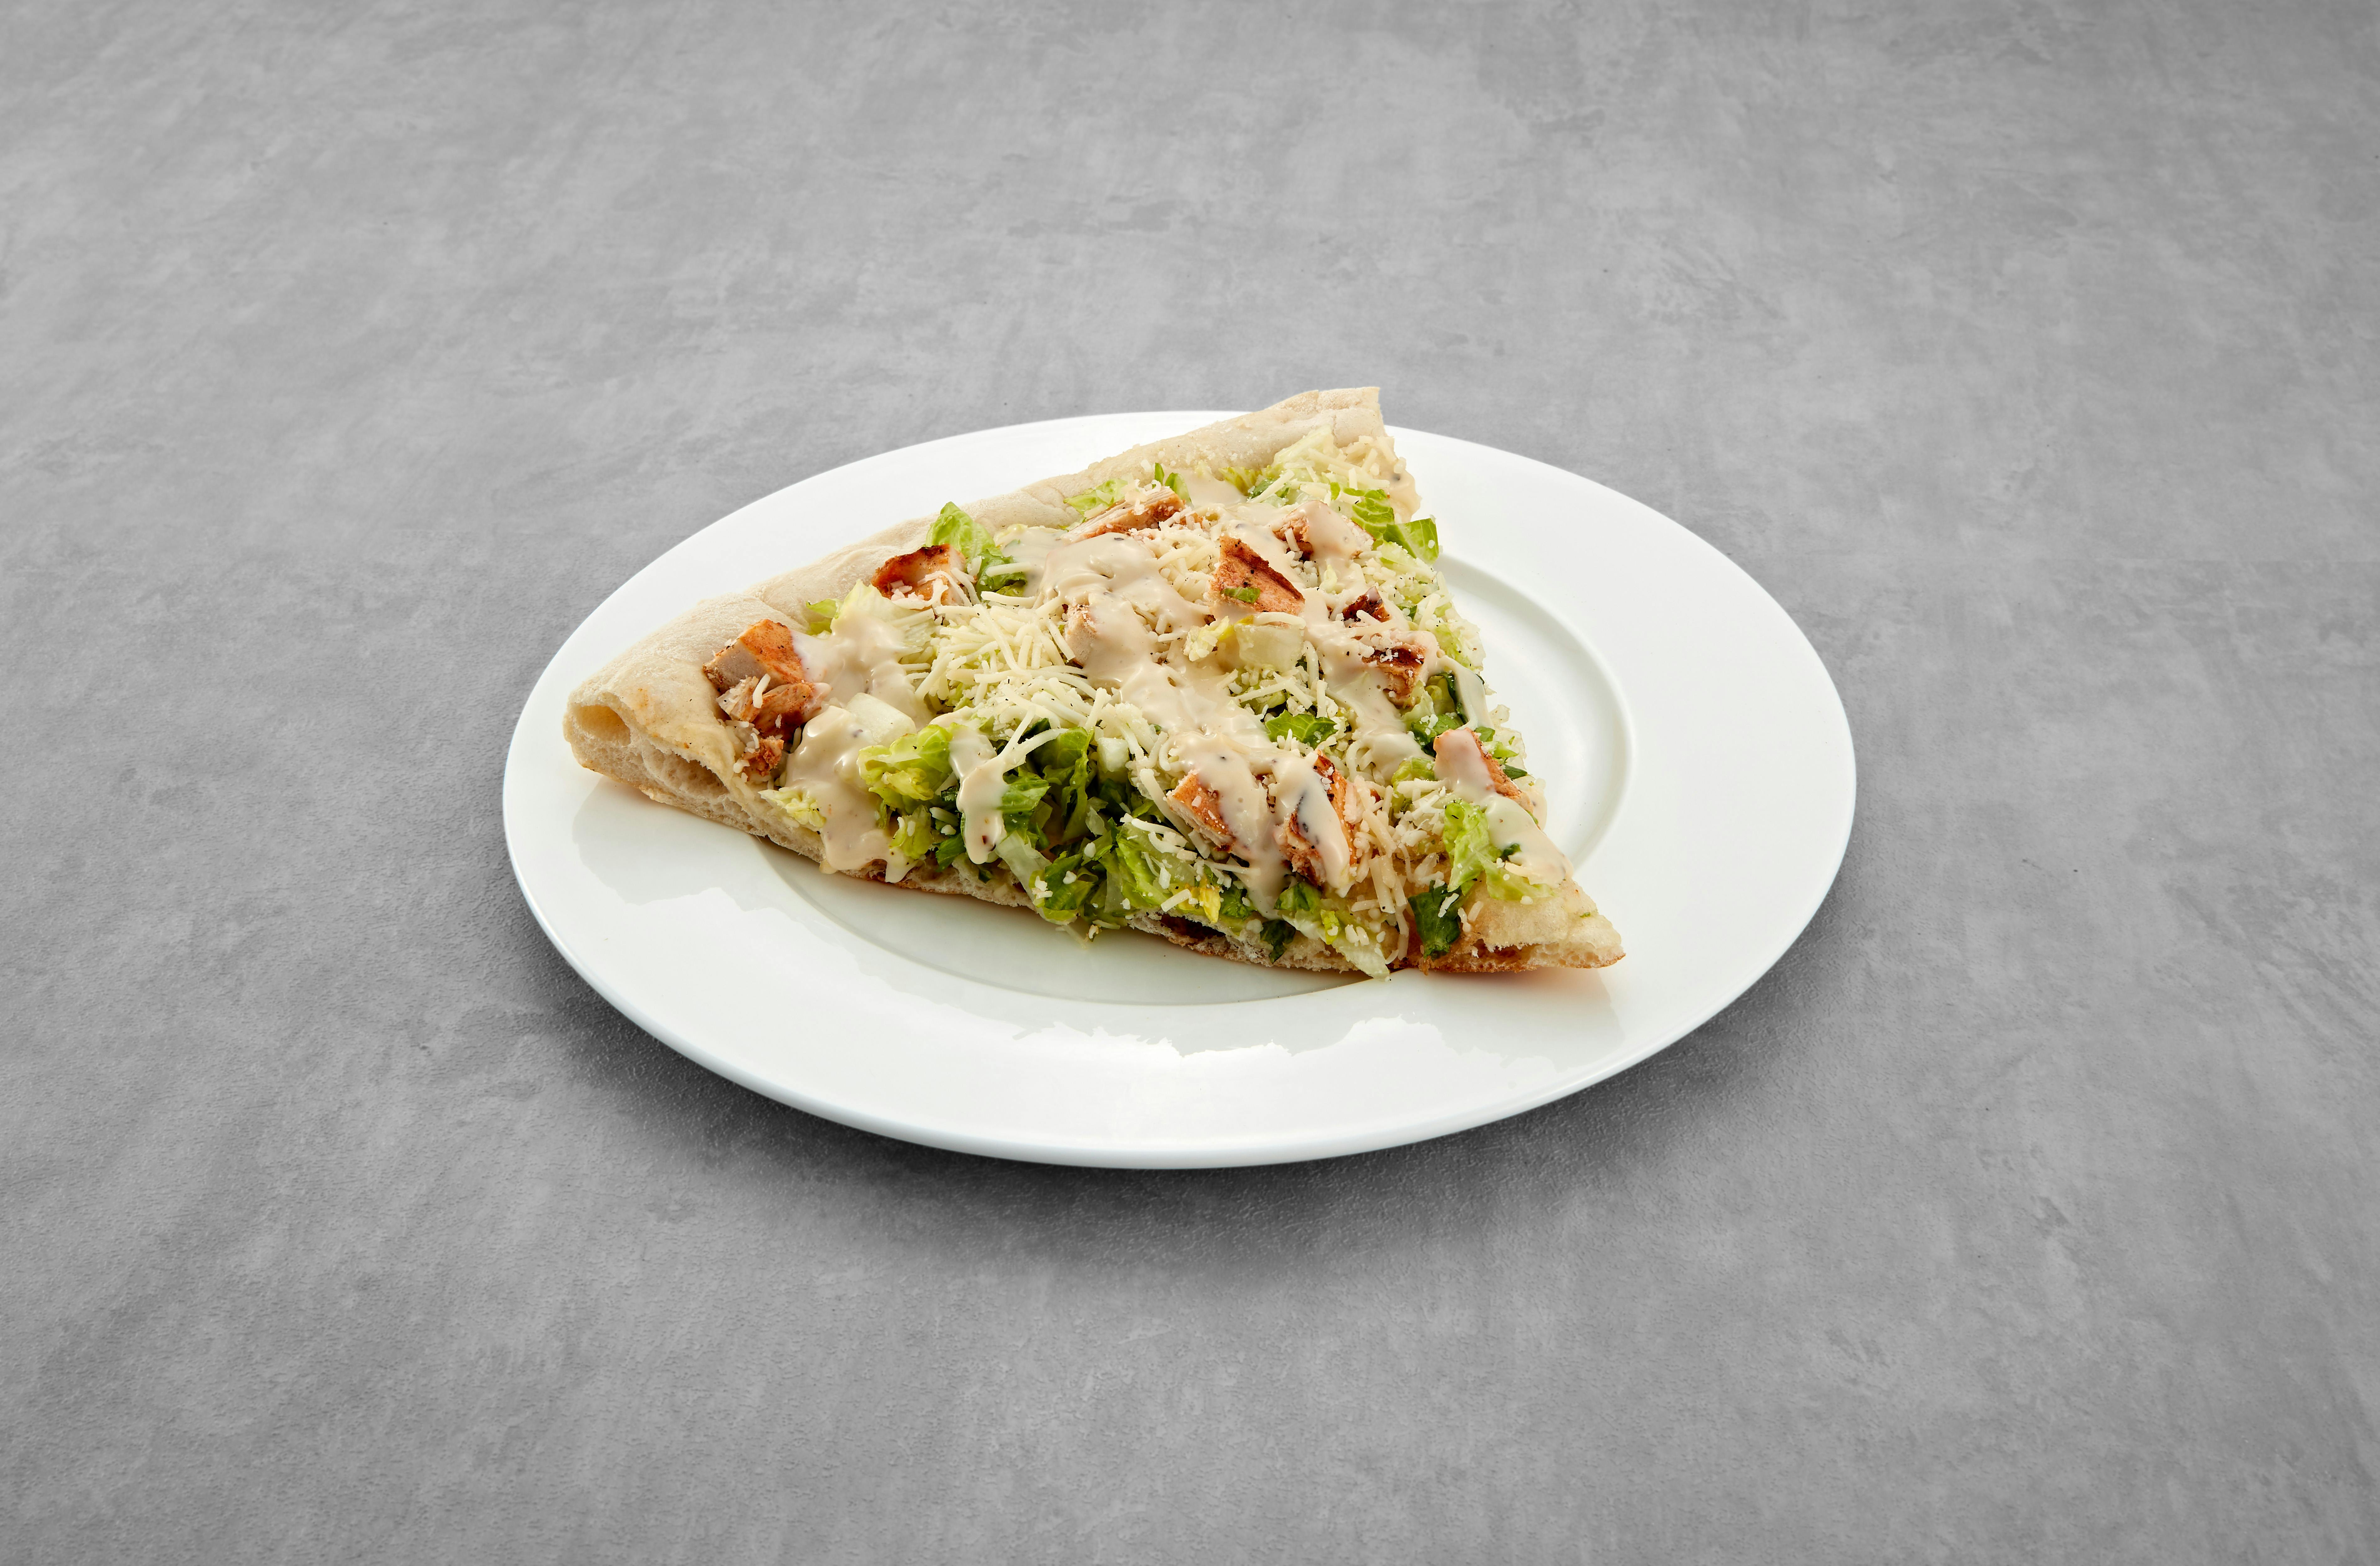 Chicken Caesar Salad Pizza Slice from Mario's Pizzeria in Seaford, NY